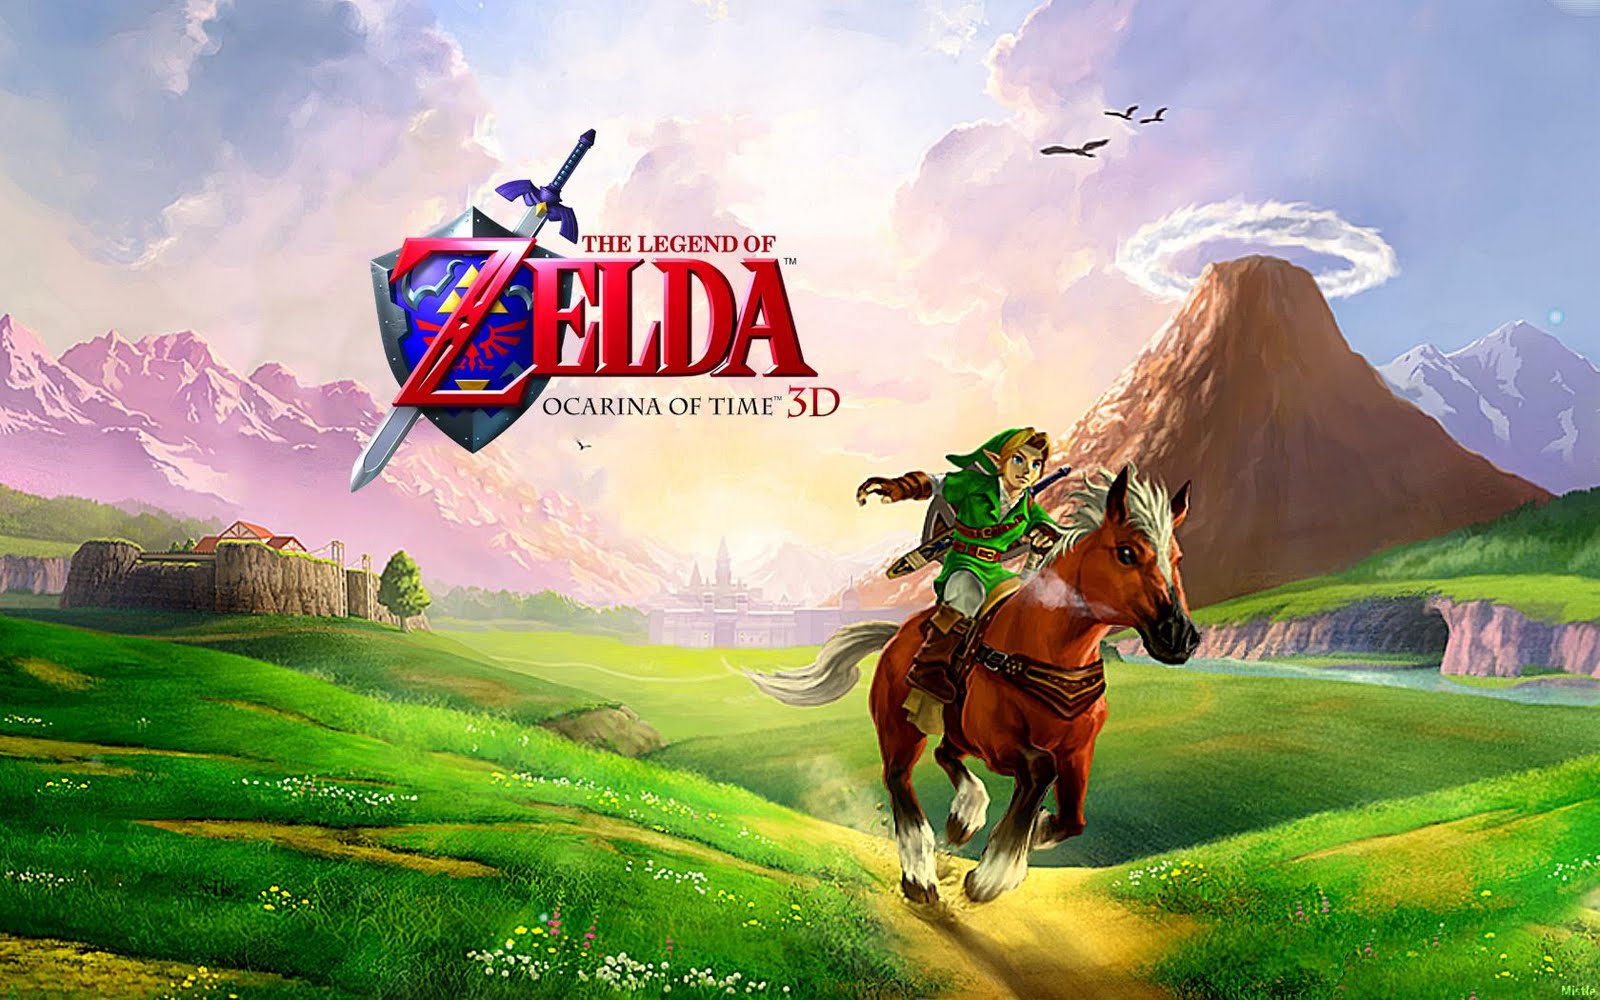 ... (Blog): Fondos de pantalla The Legend of Zelda: Ocarina of Time 3DS